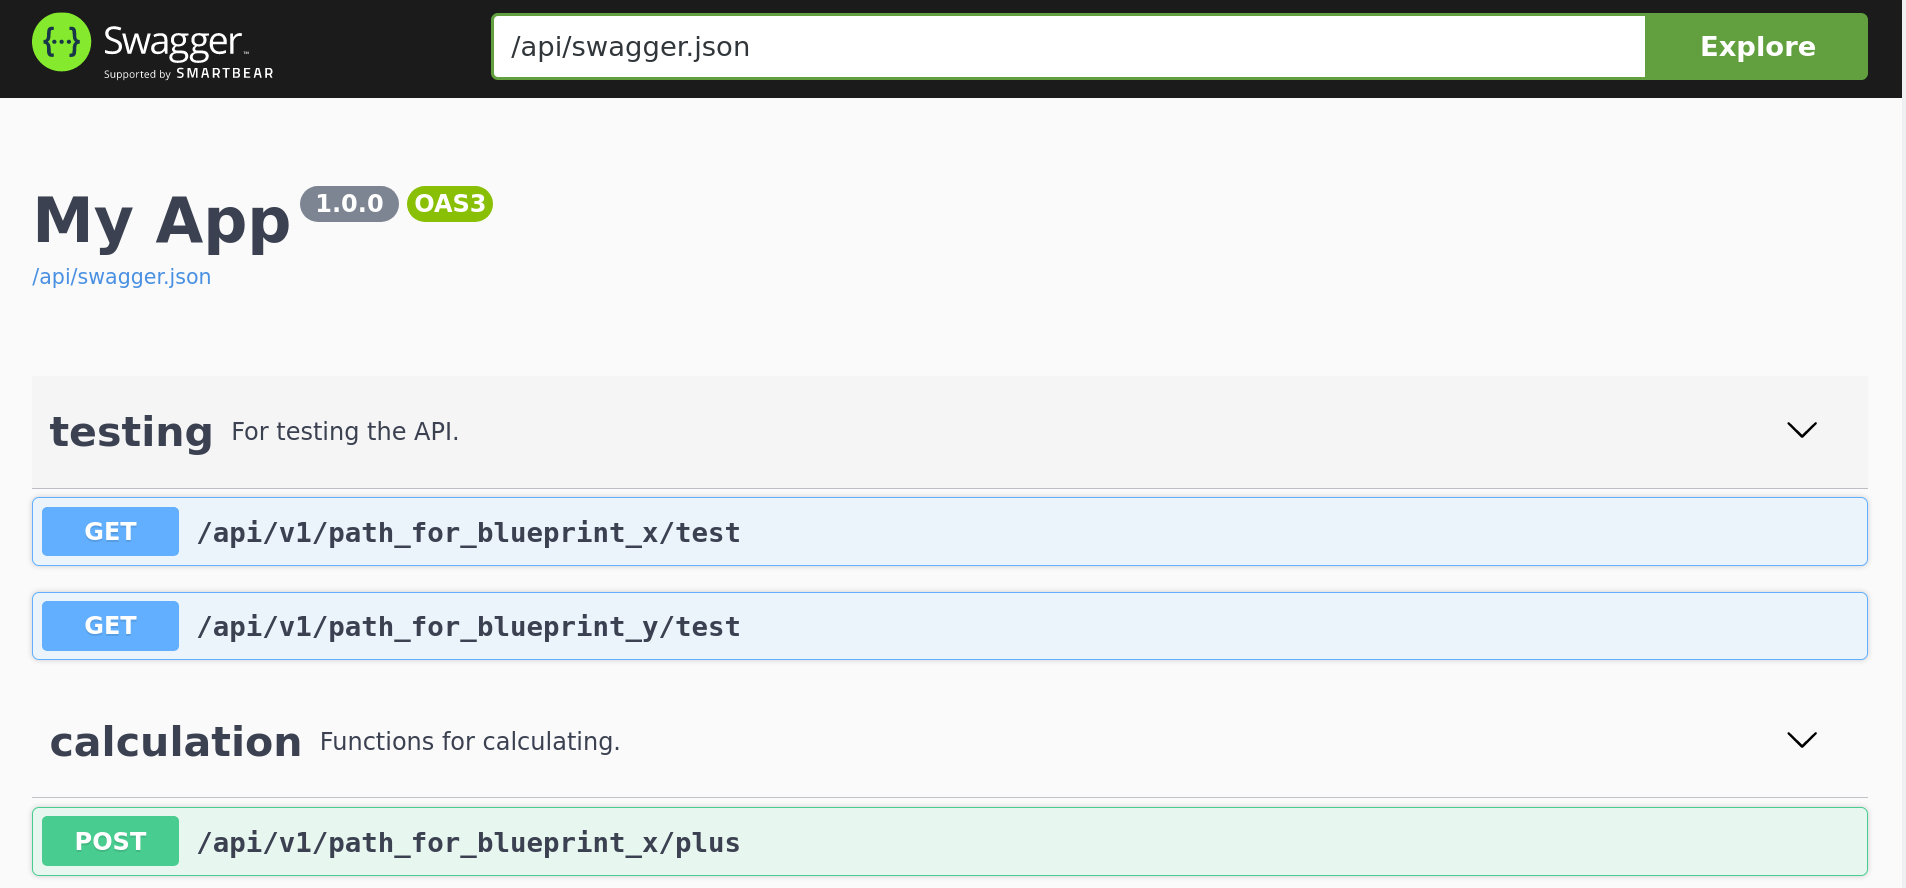 Swagger UI API documentation